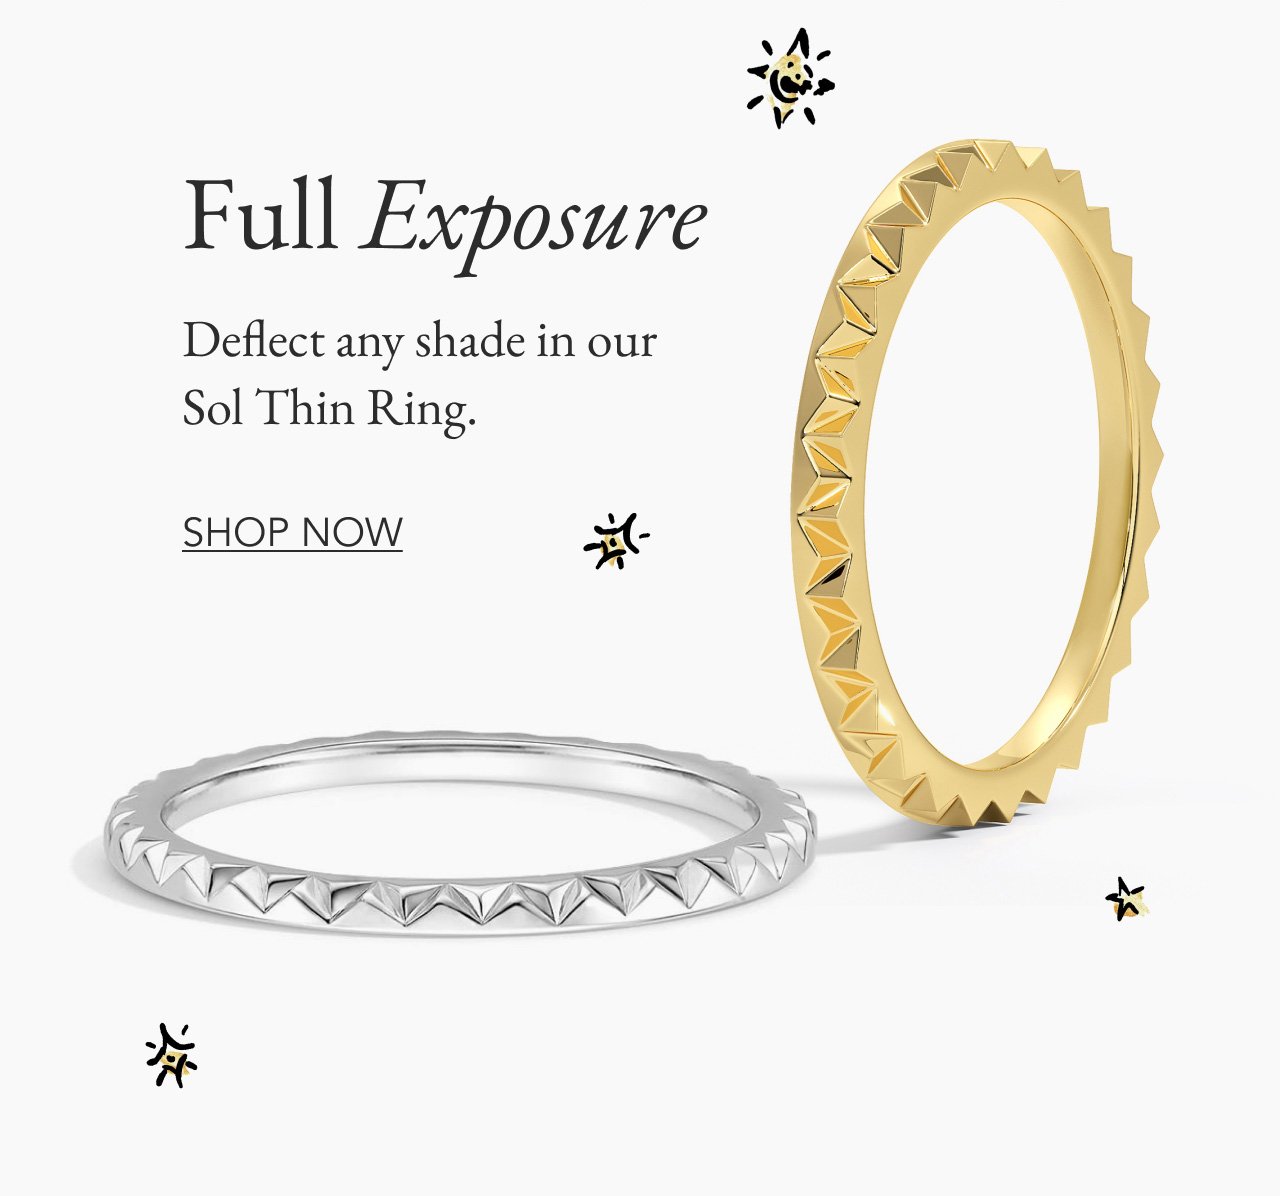 Sol Thin Ring